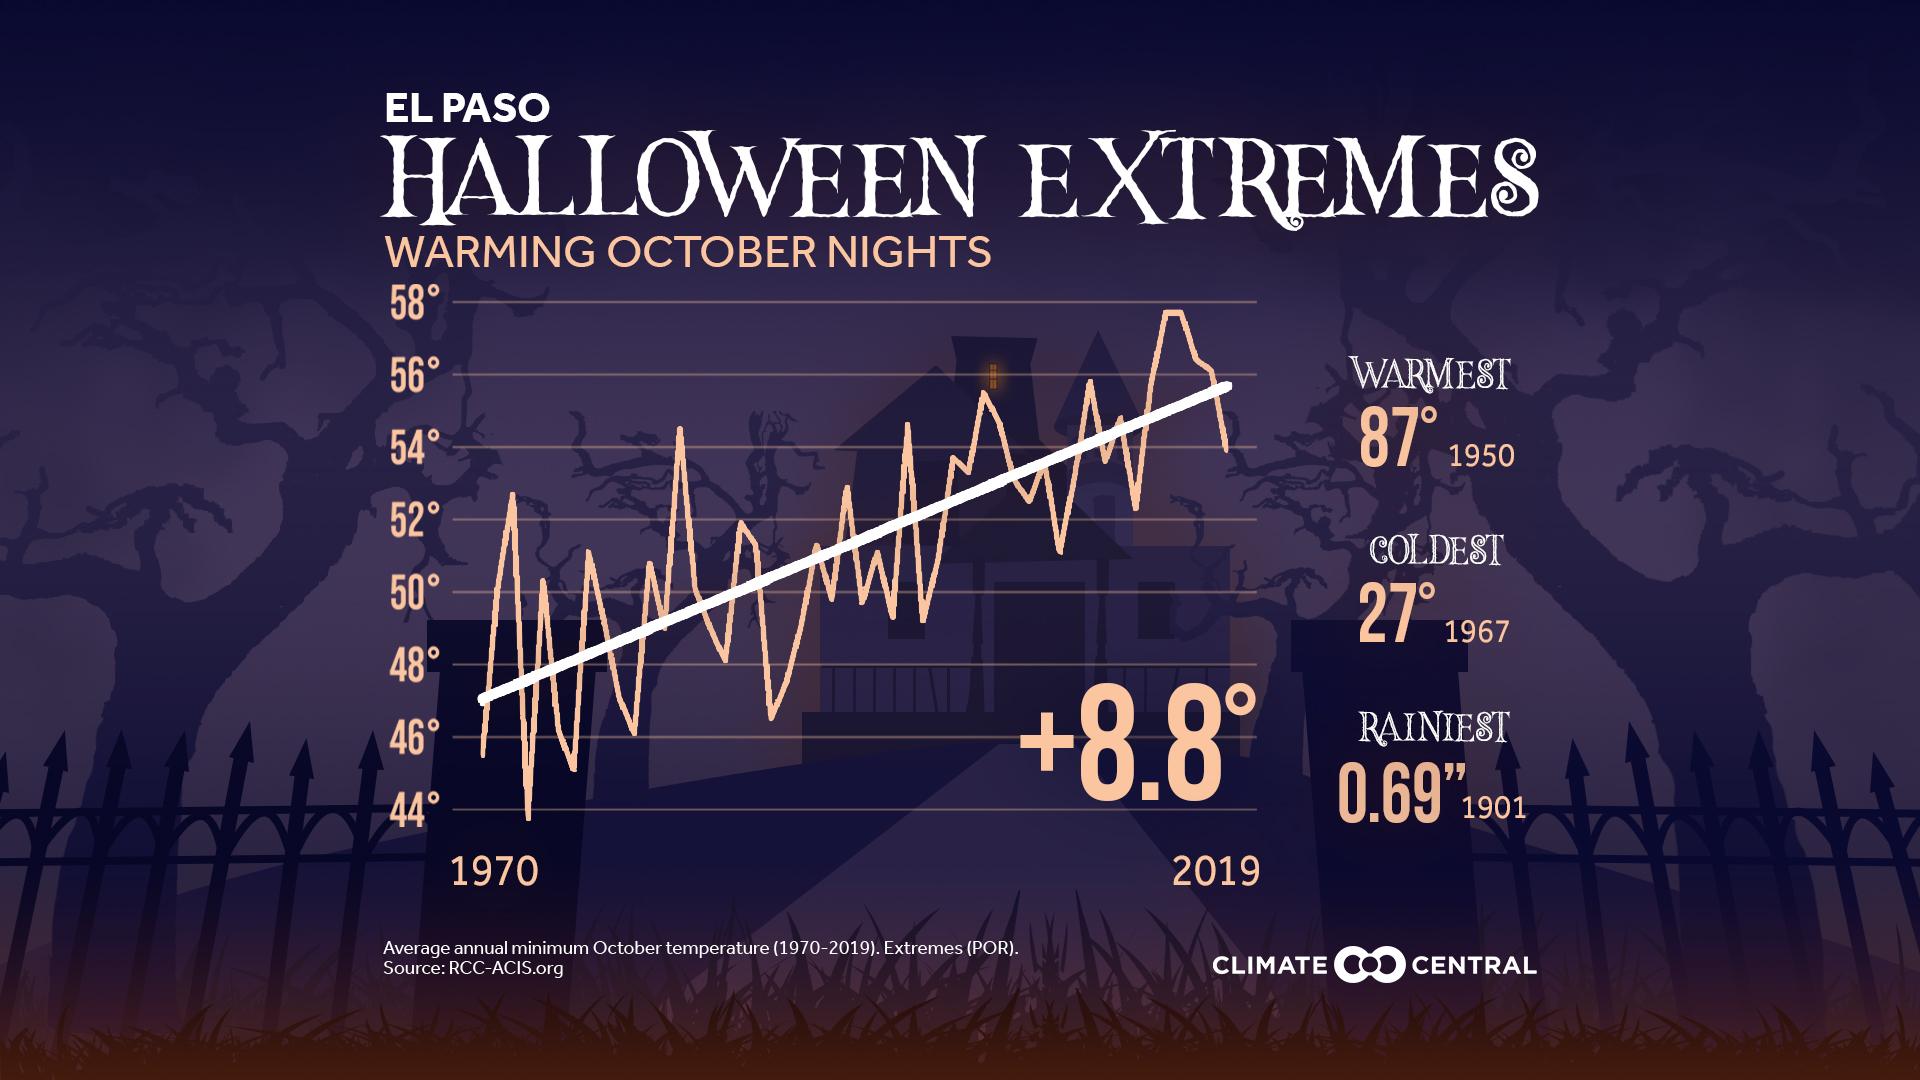 Halloween Extremes & Warming October Nights